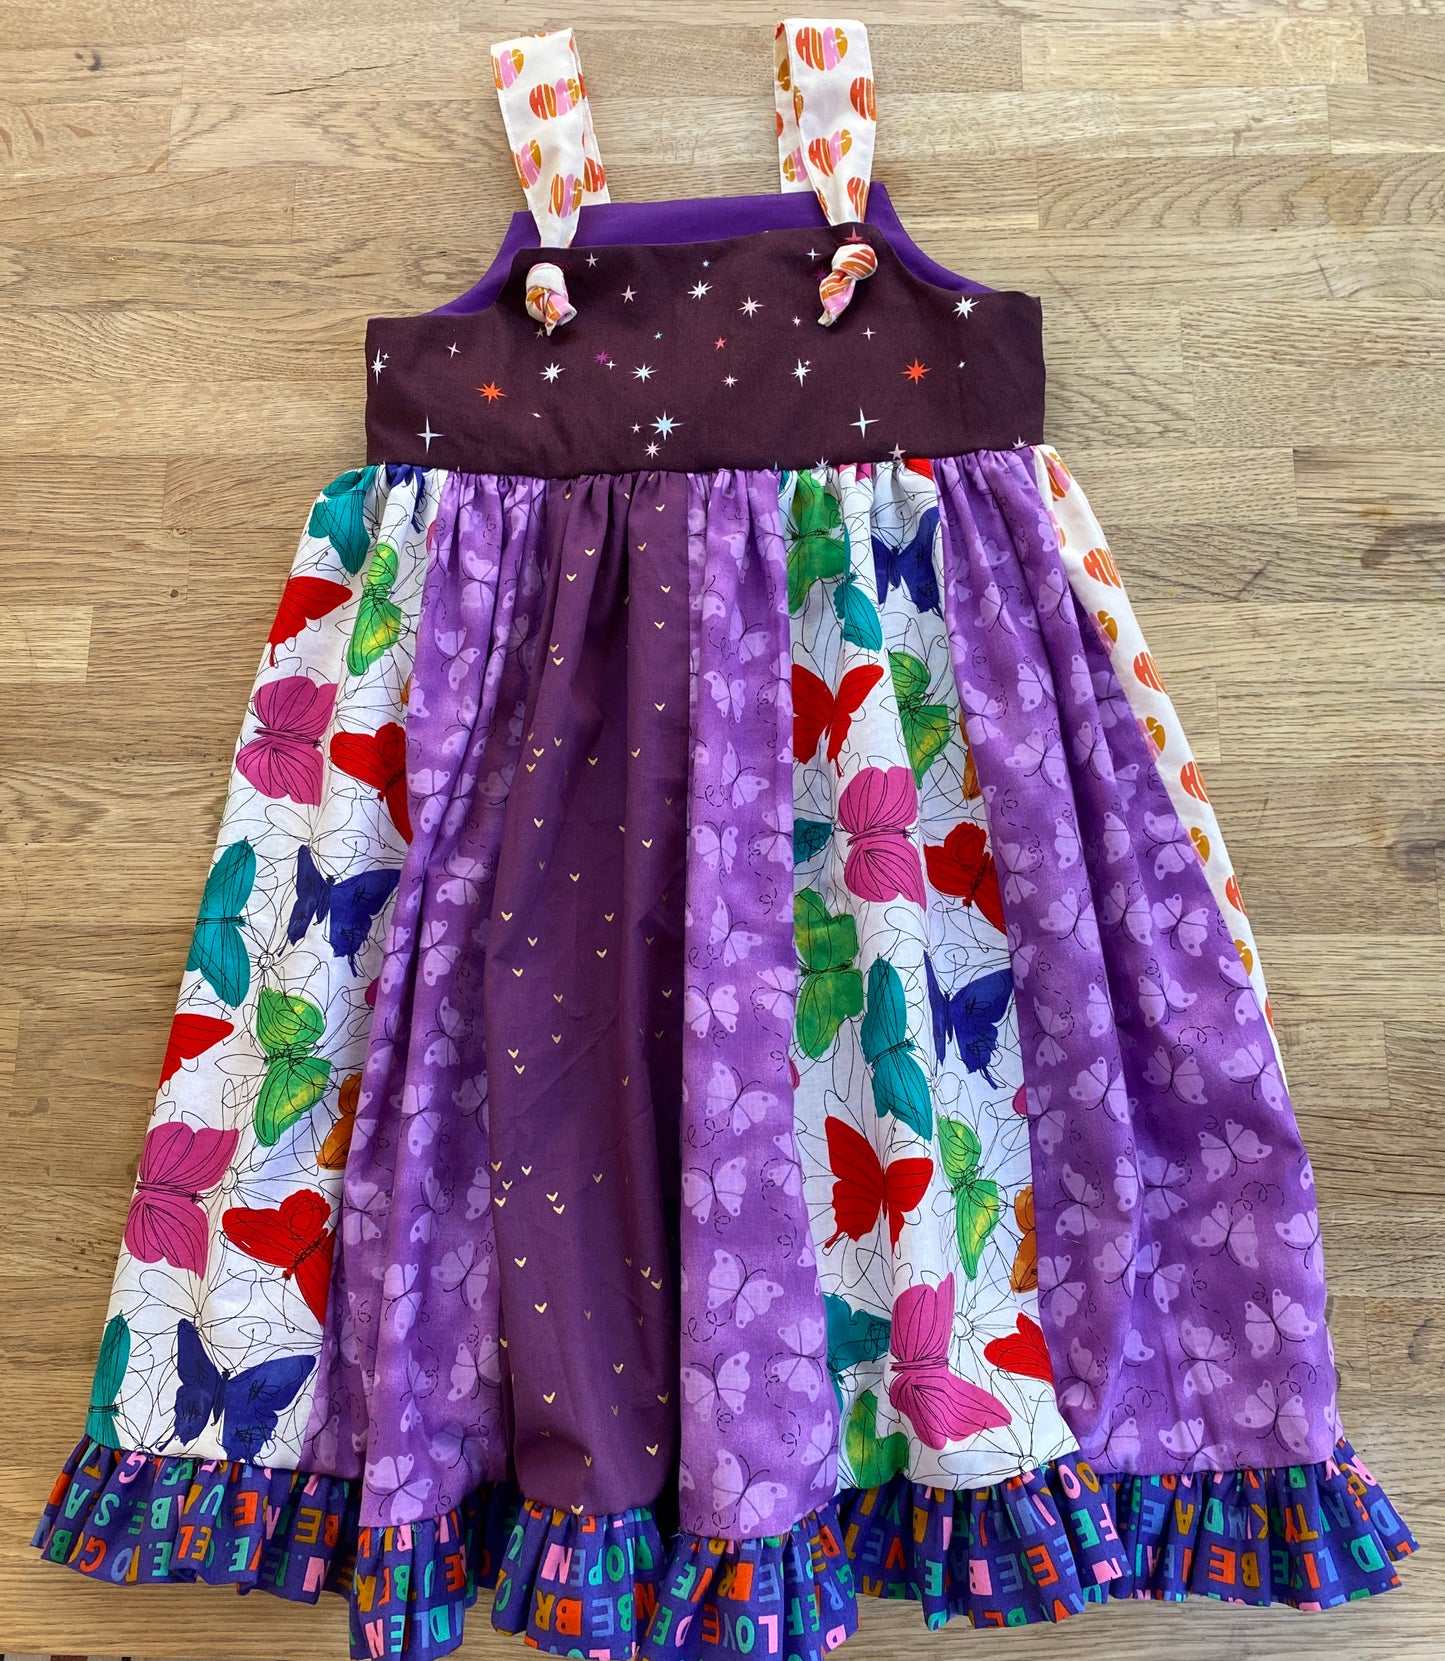 Purple Patchwork Tie Dress - Size 6 (NEW) - Ready to Ship